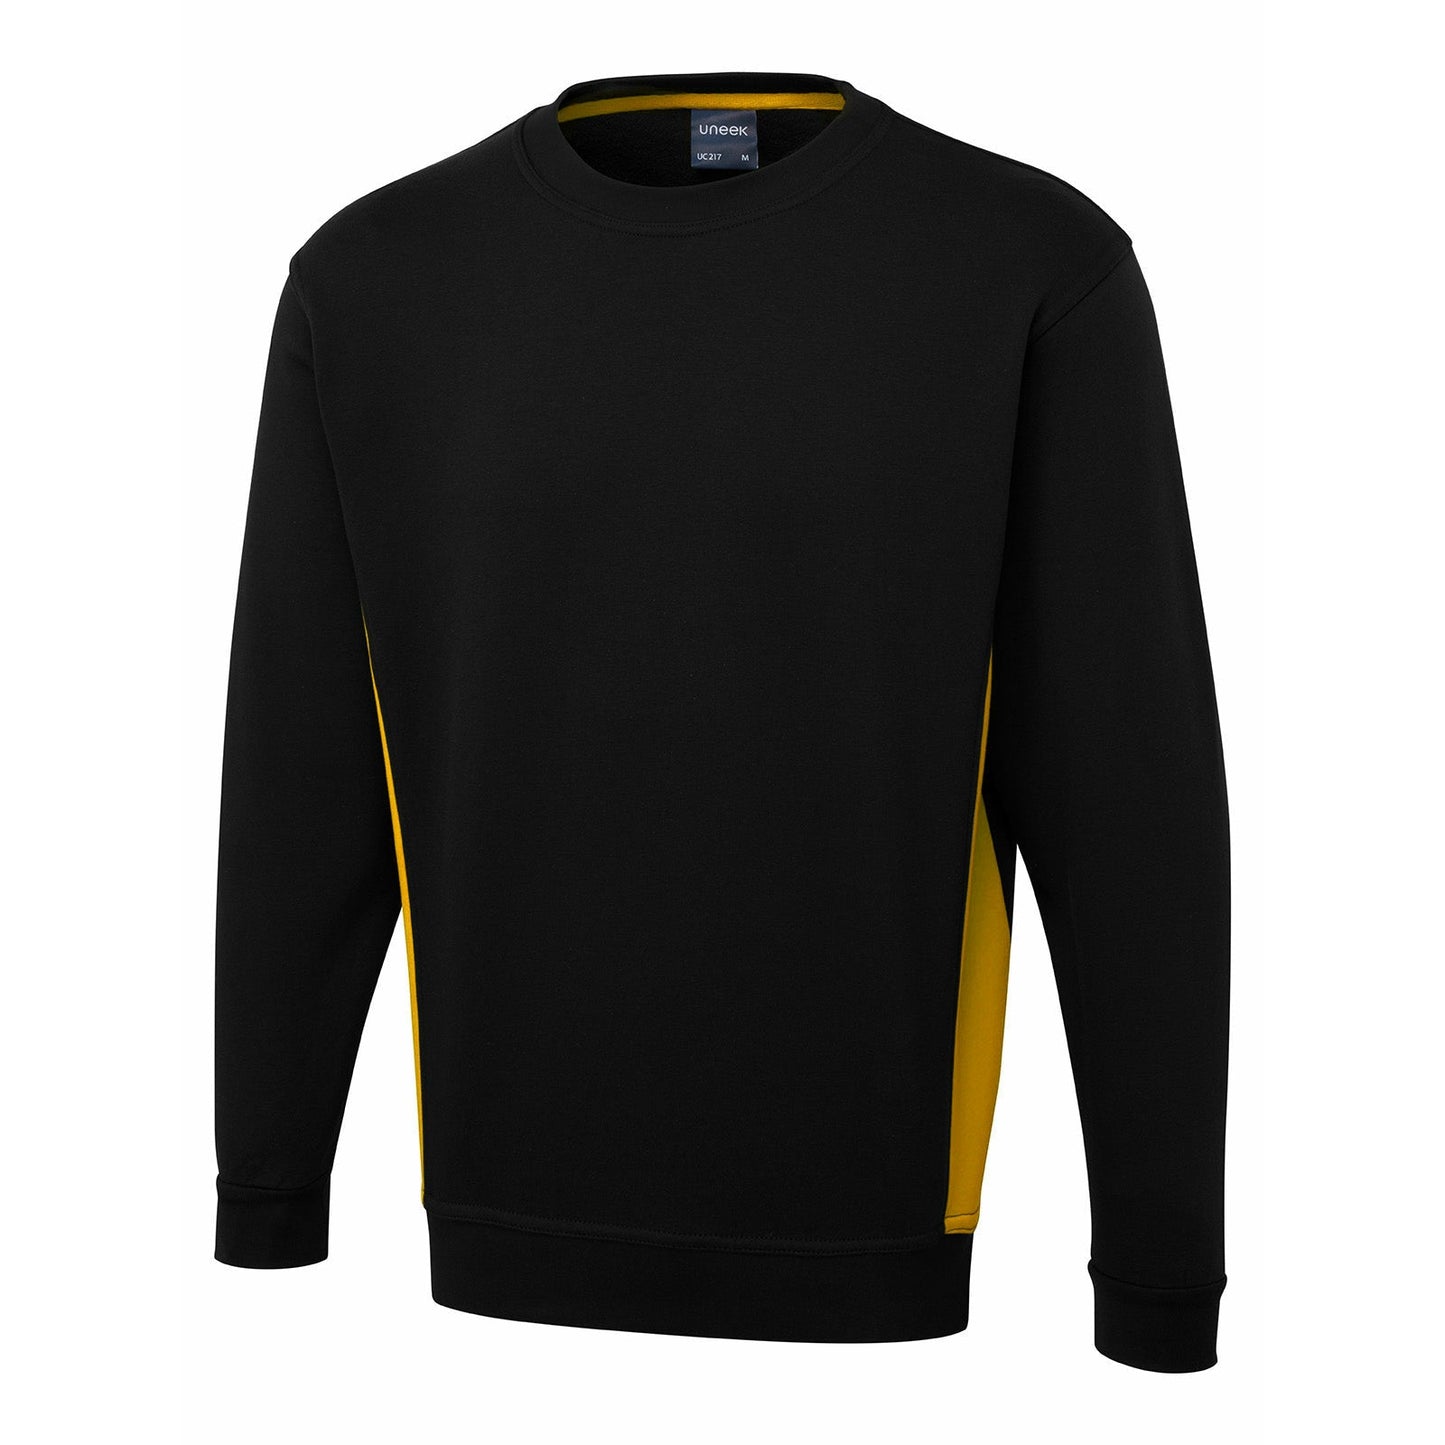 Two Tone Crew New Sweatshirt Black and Yellow